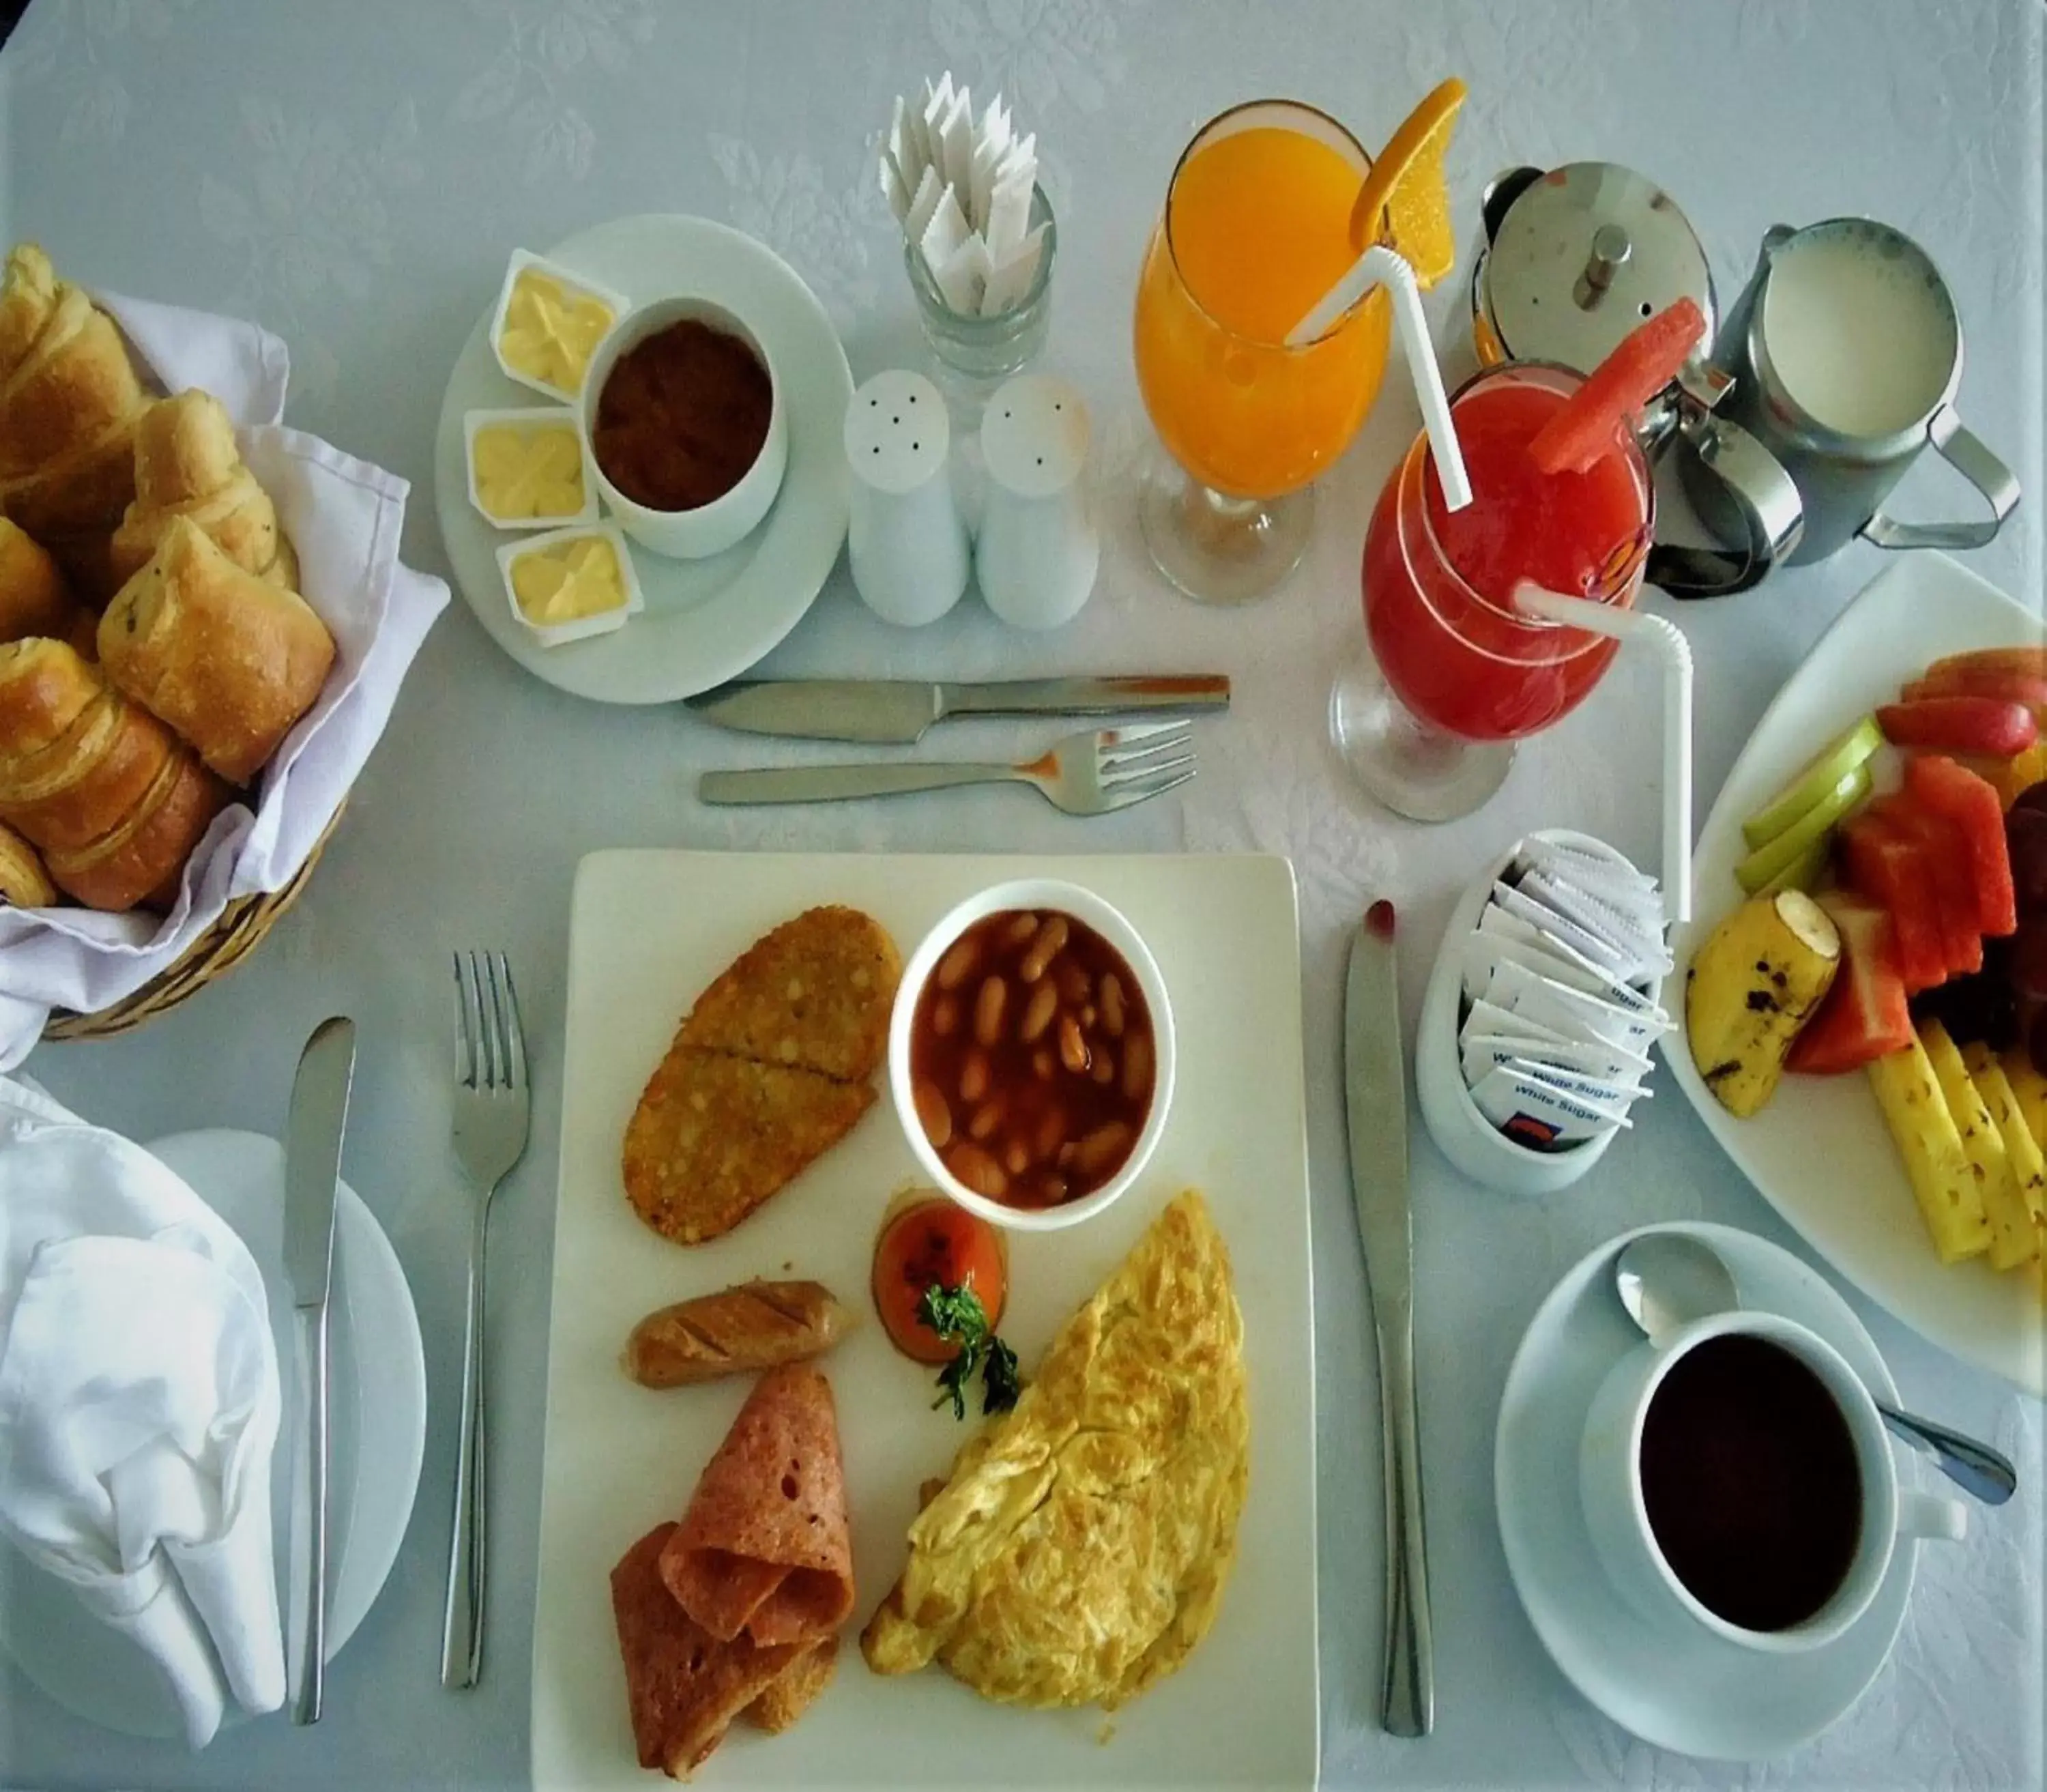 Breakfast in Global Towers Hotel & Apartments